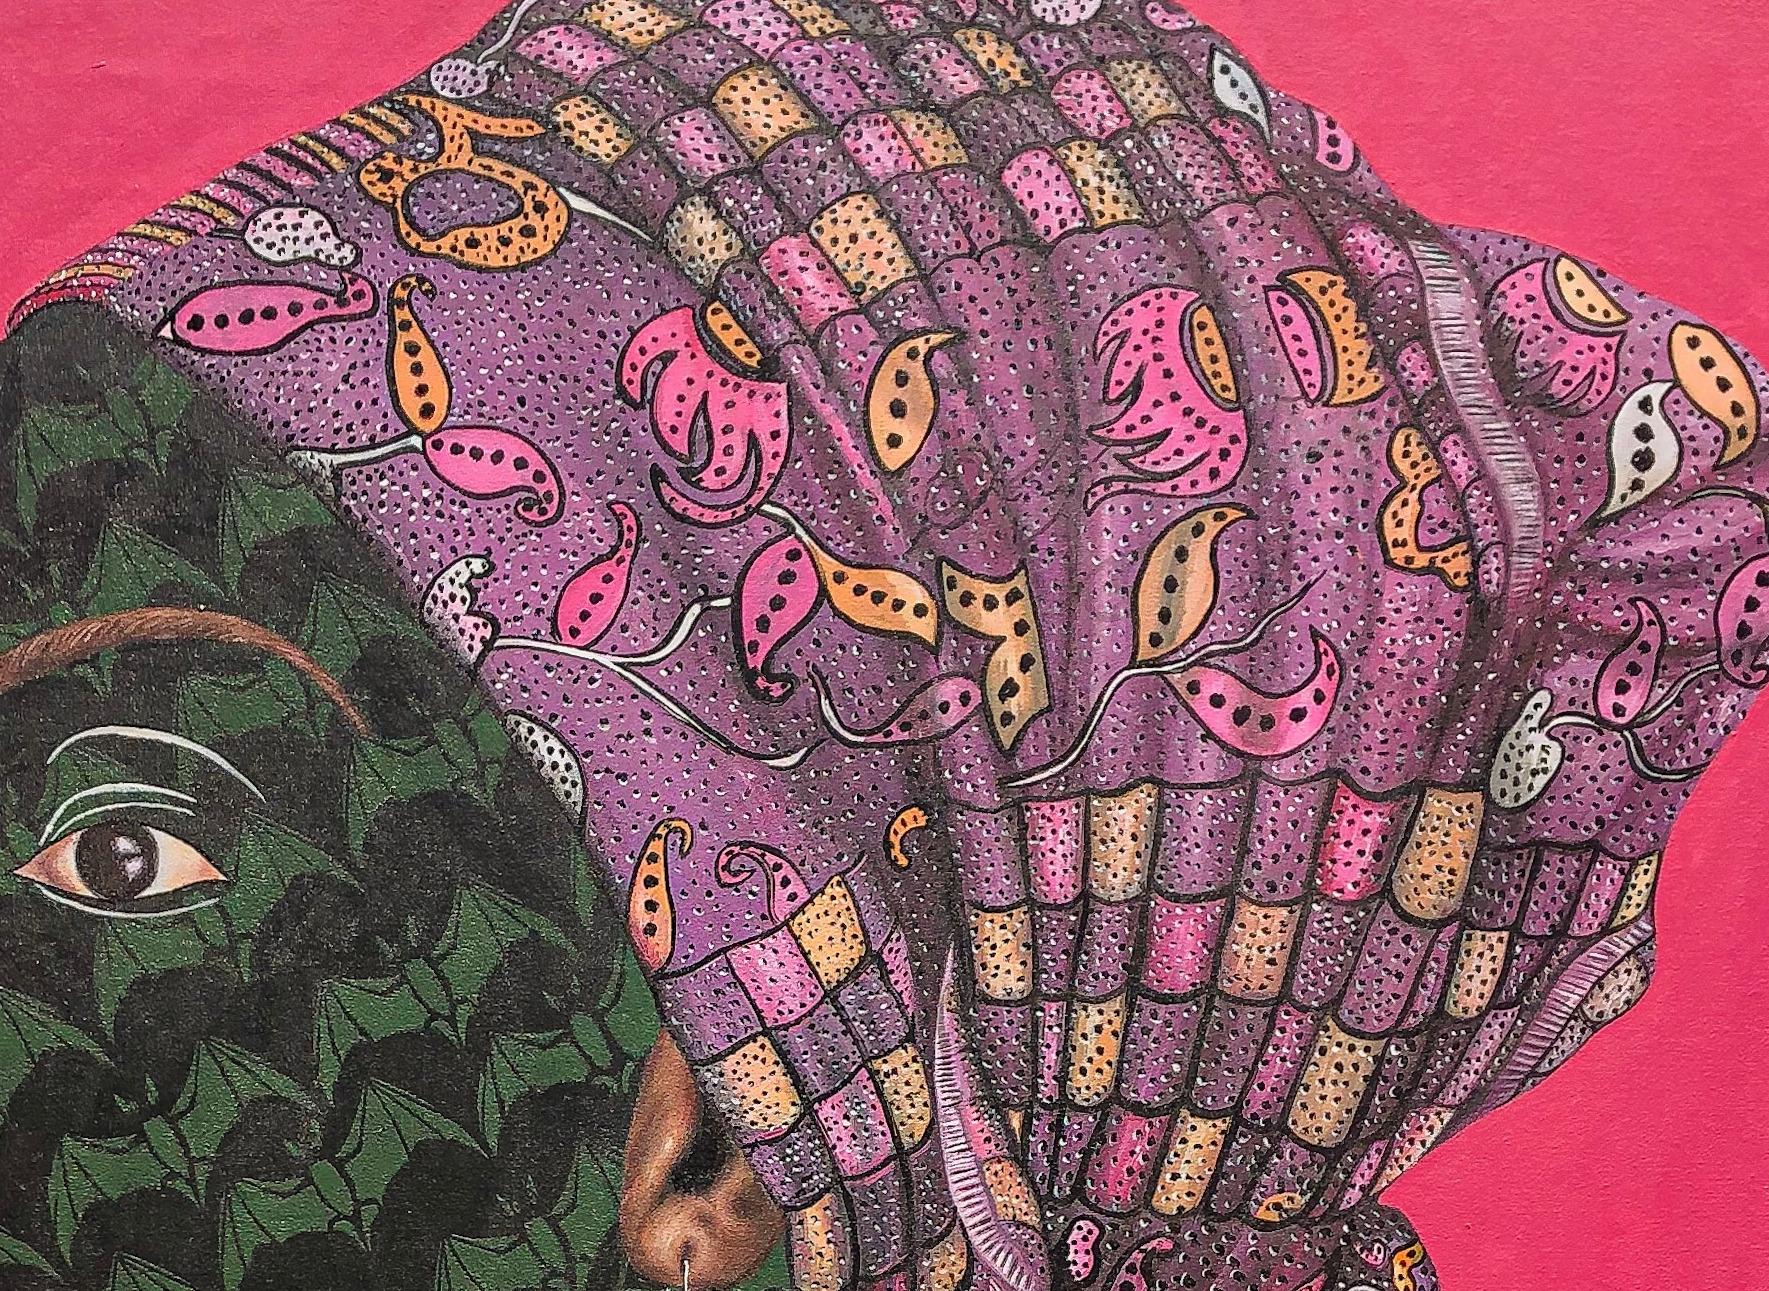 GÈLÈ 3 (Head Tie) - Painting by Oluwafemi Afolabi